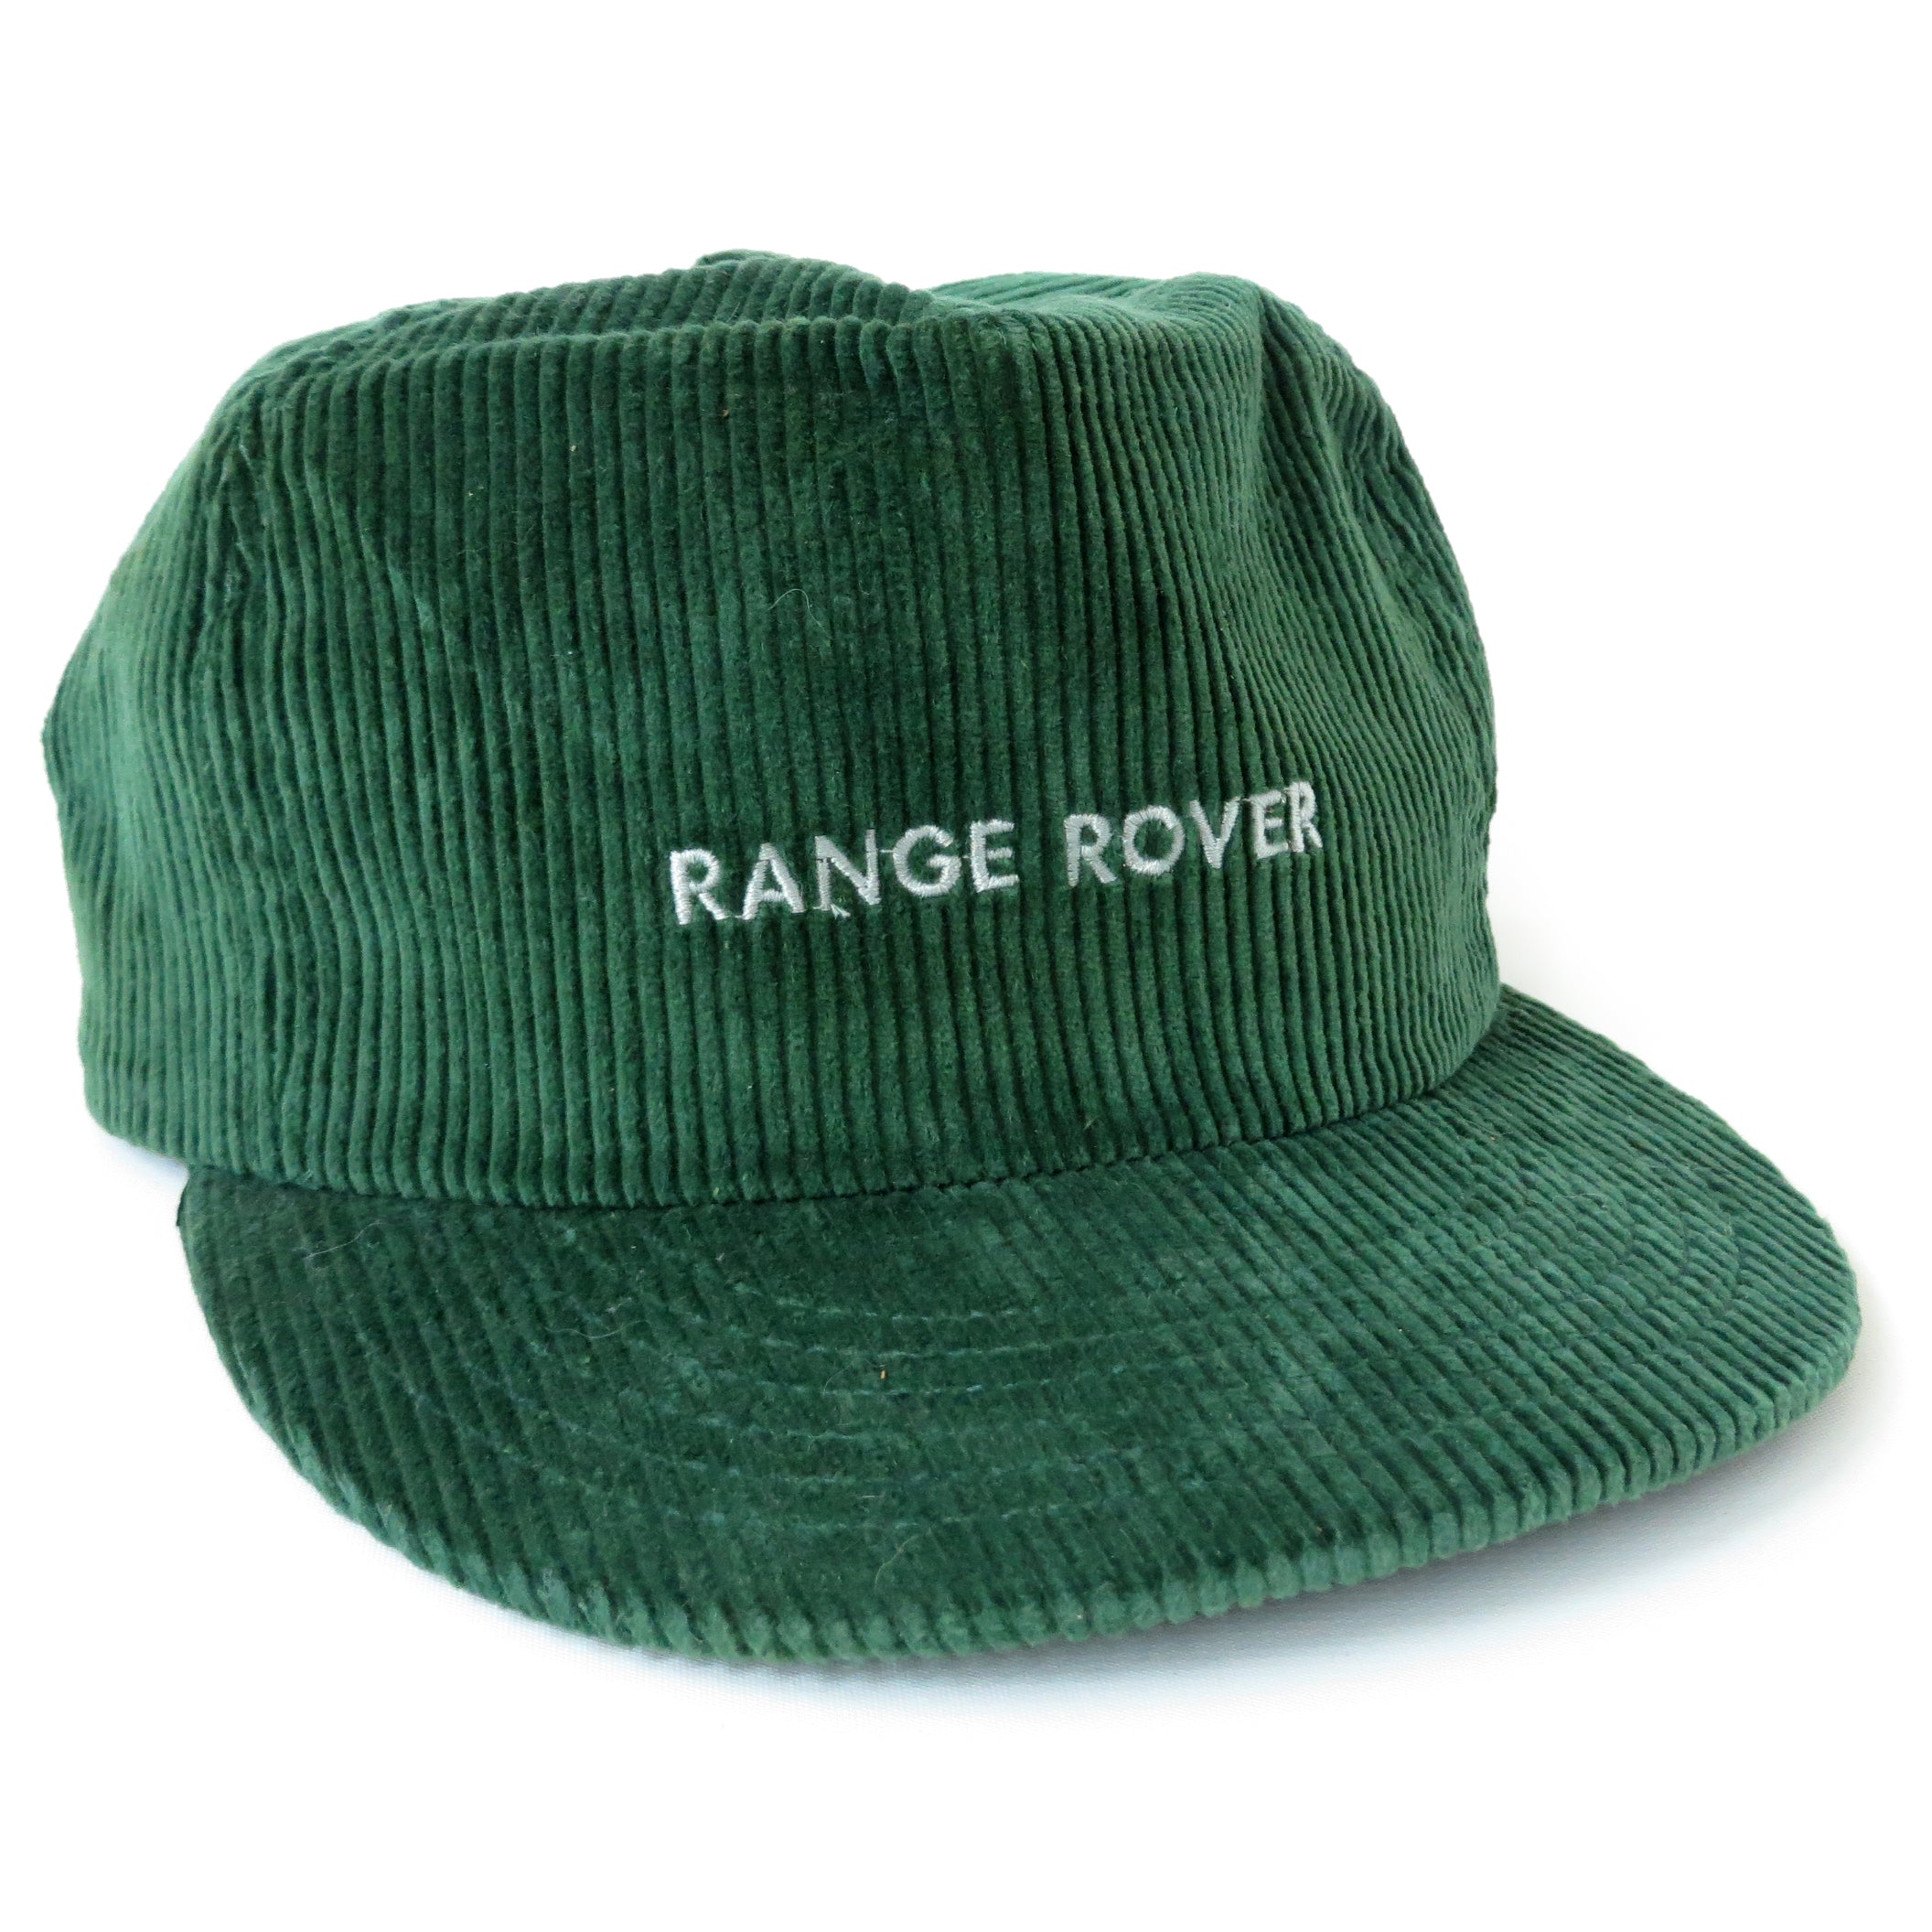 Vintage Range Rover Corduroy Strapback Hat